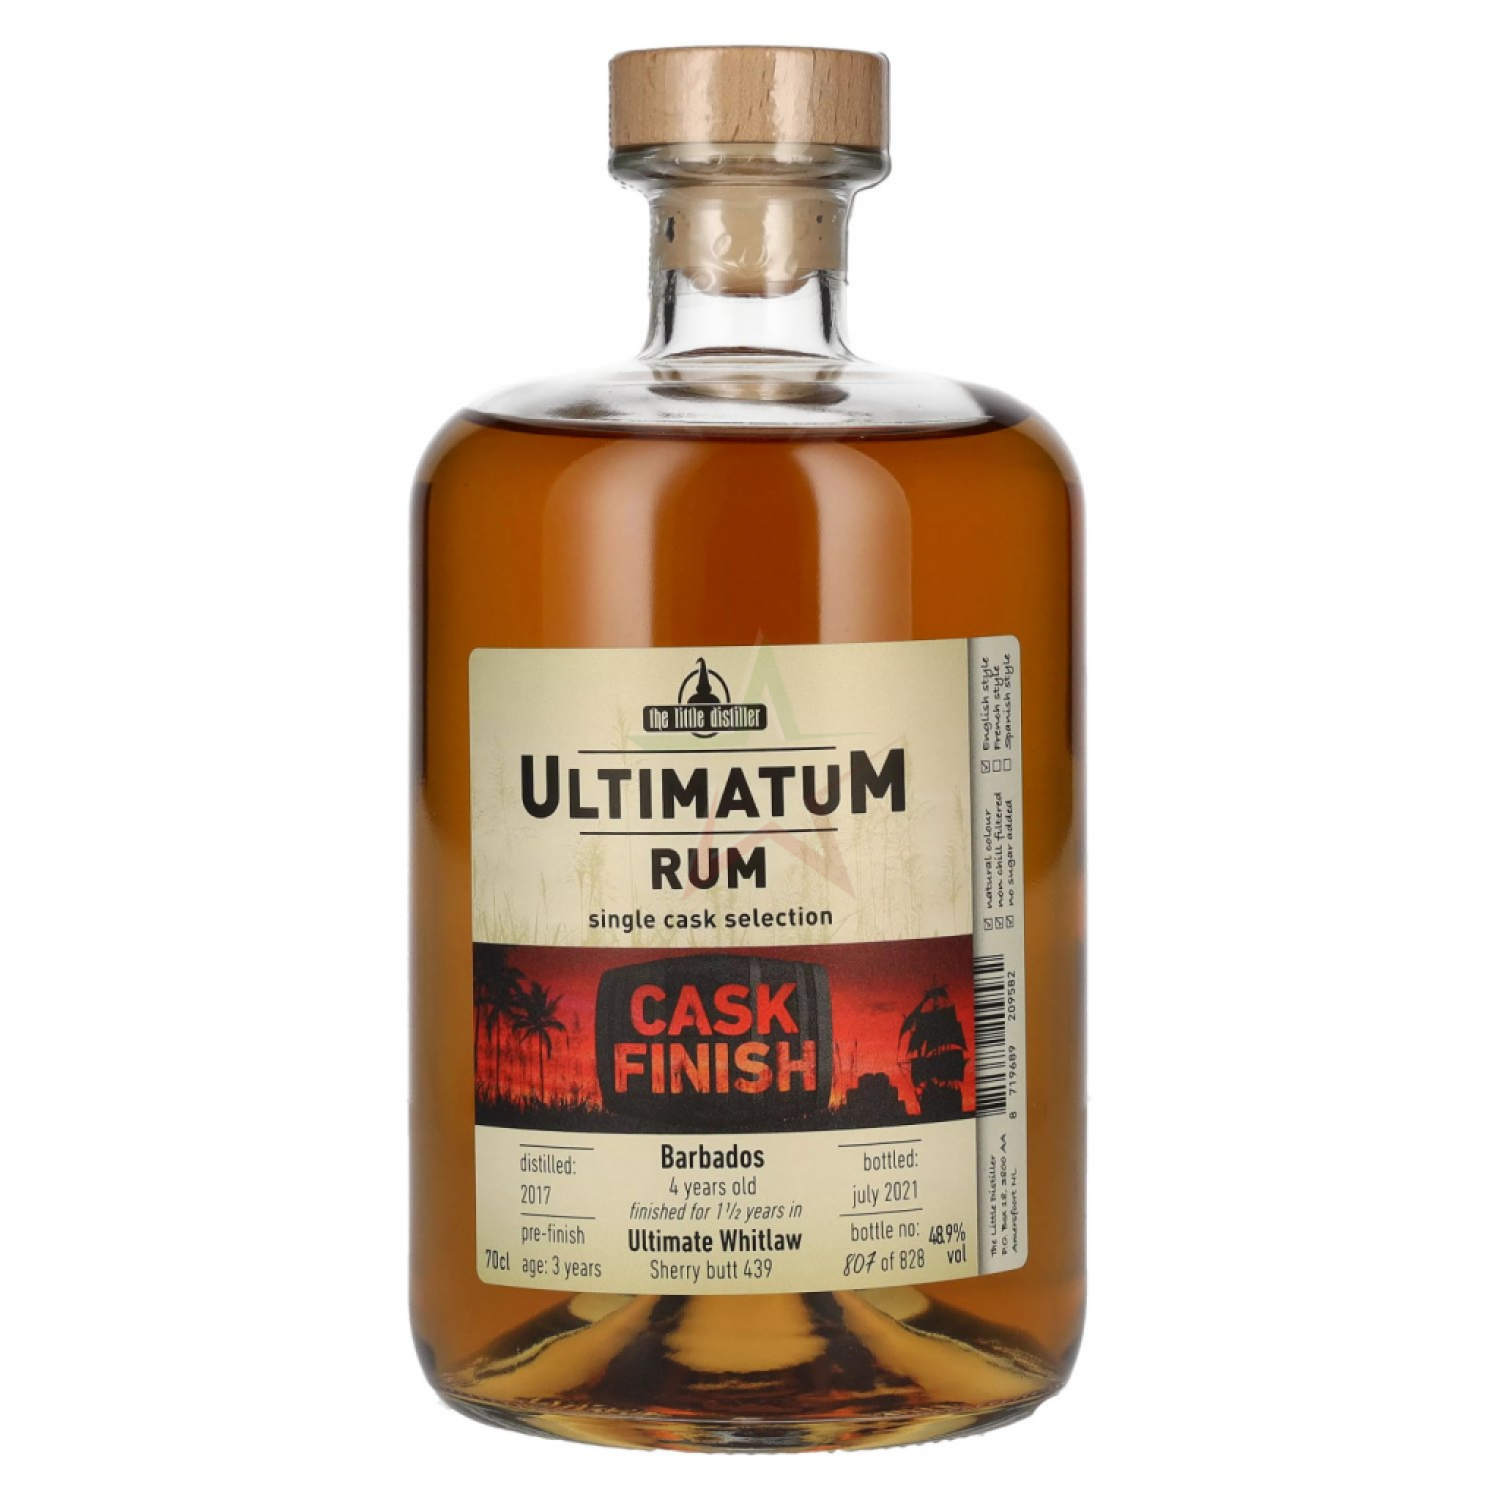 FINISH 48.9 lt. UltimatuM CASK - 0,70 H&H Barbados Old % 4 Years Rum Shop